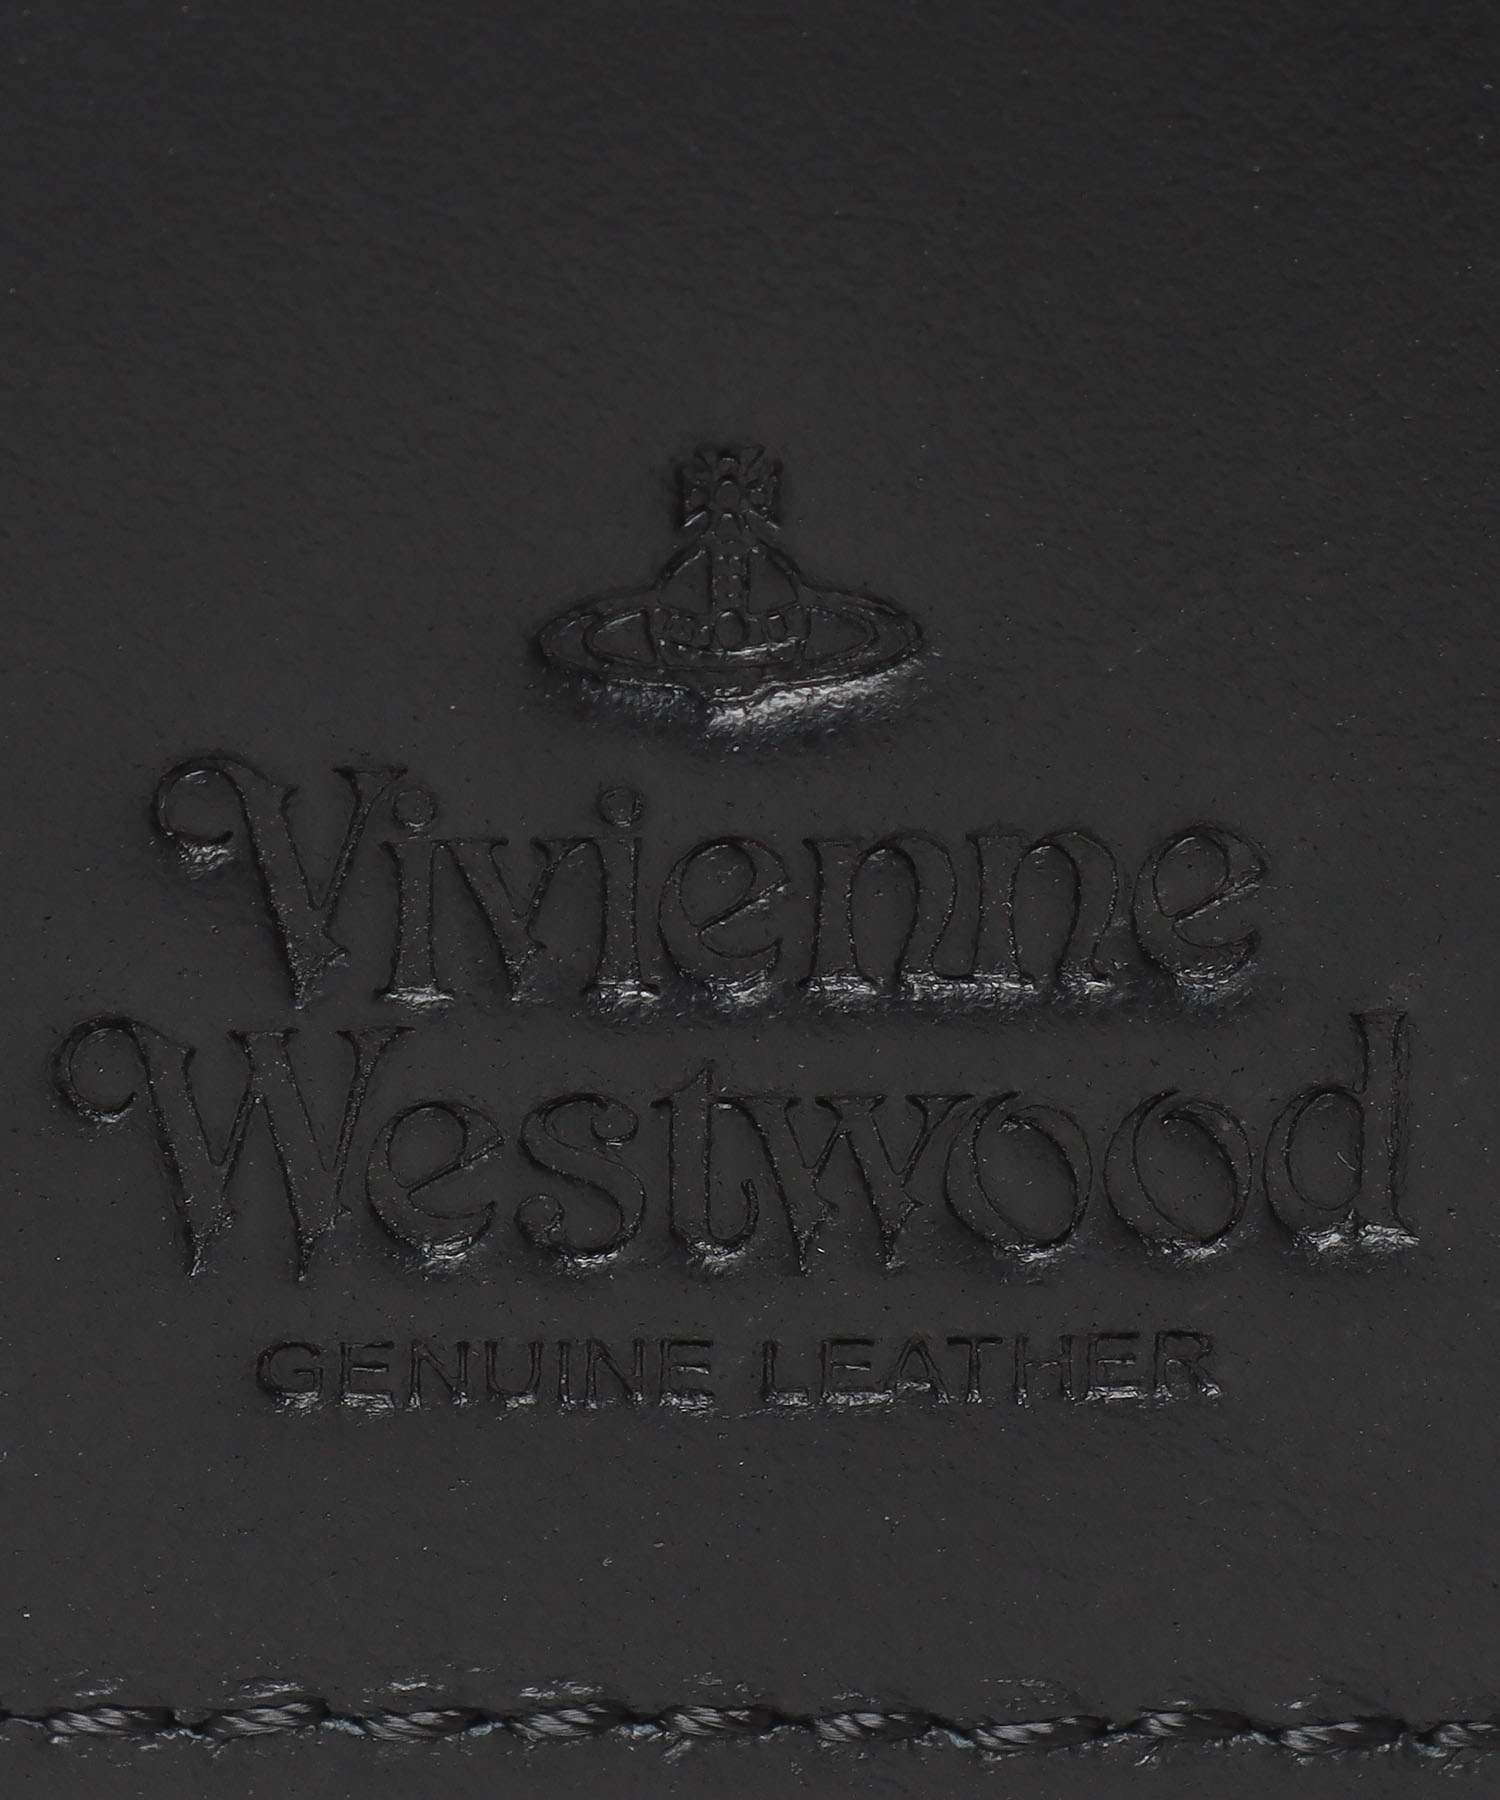 Vivienne Westwood サフィアーノ エンベロープ 三つ折り財布